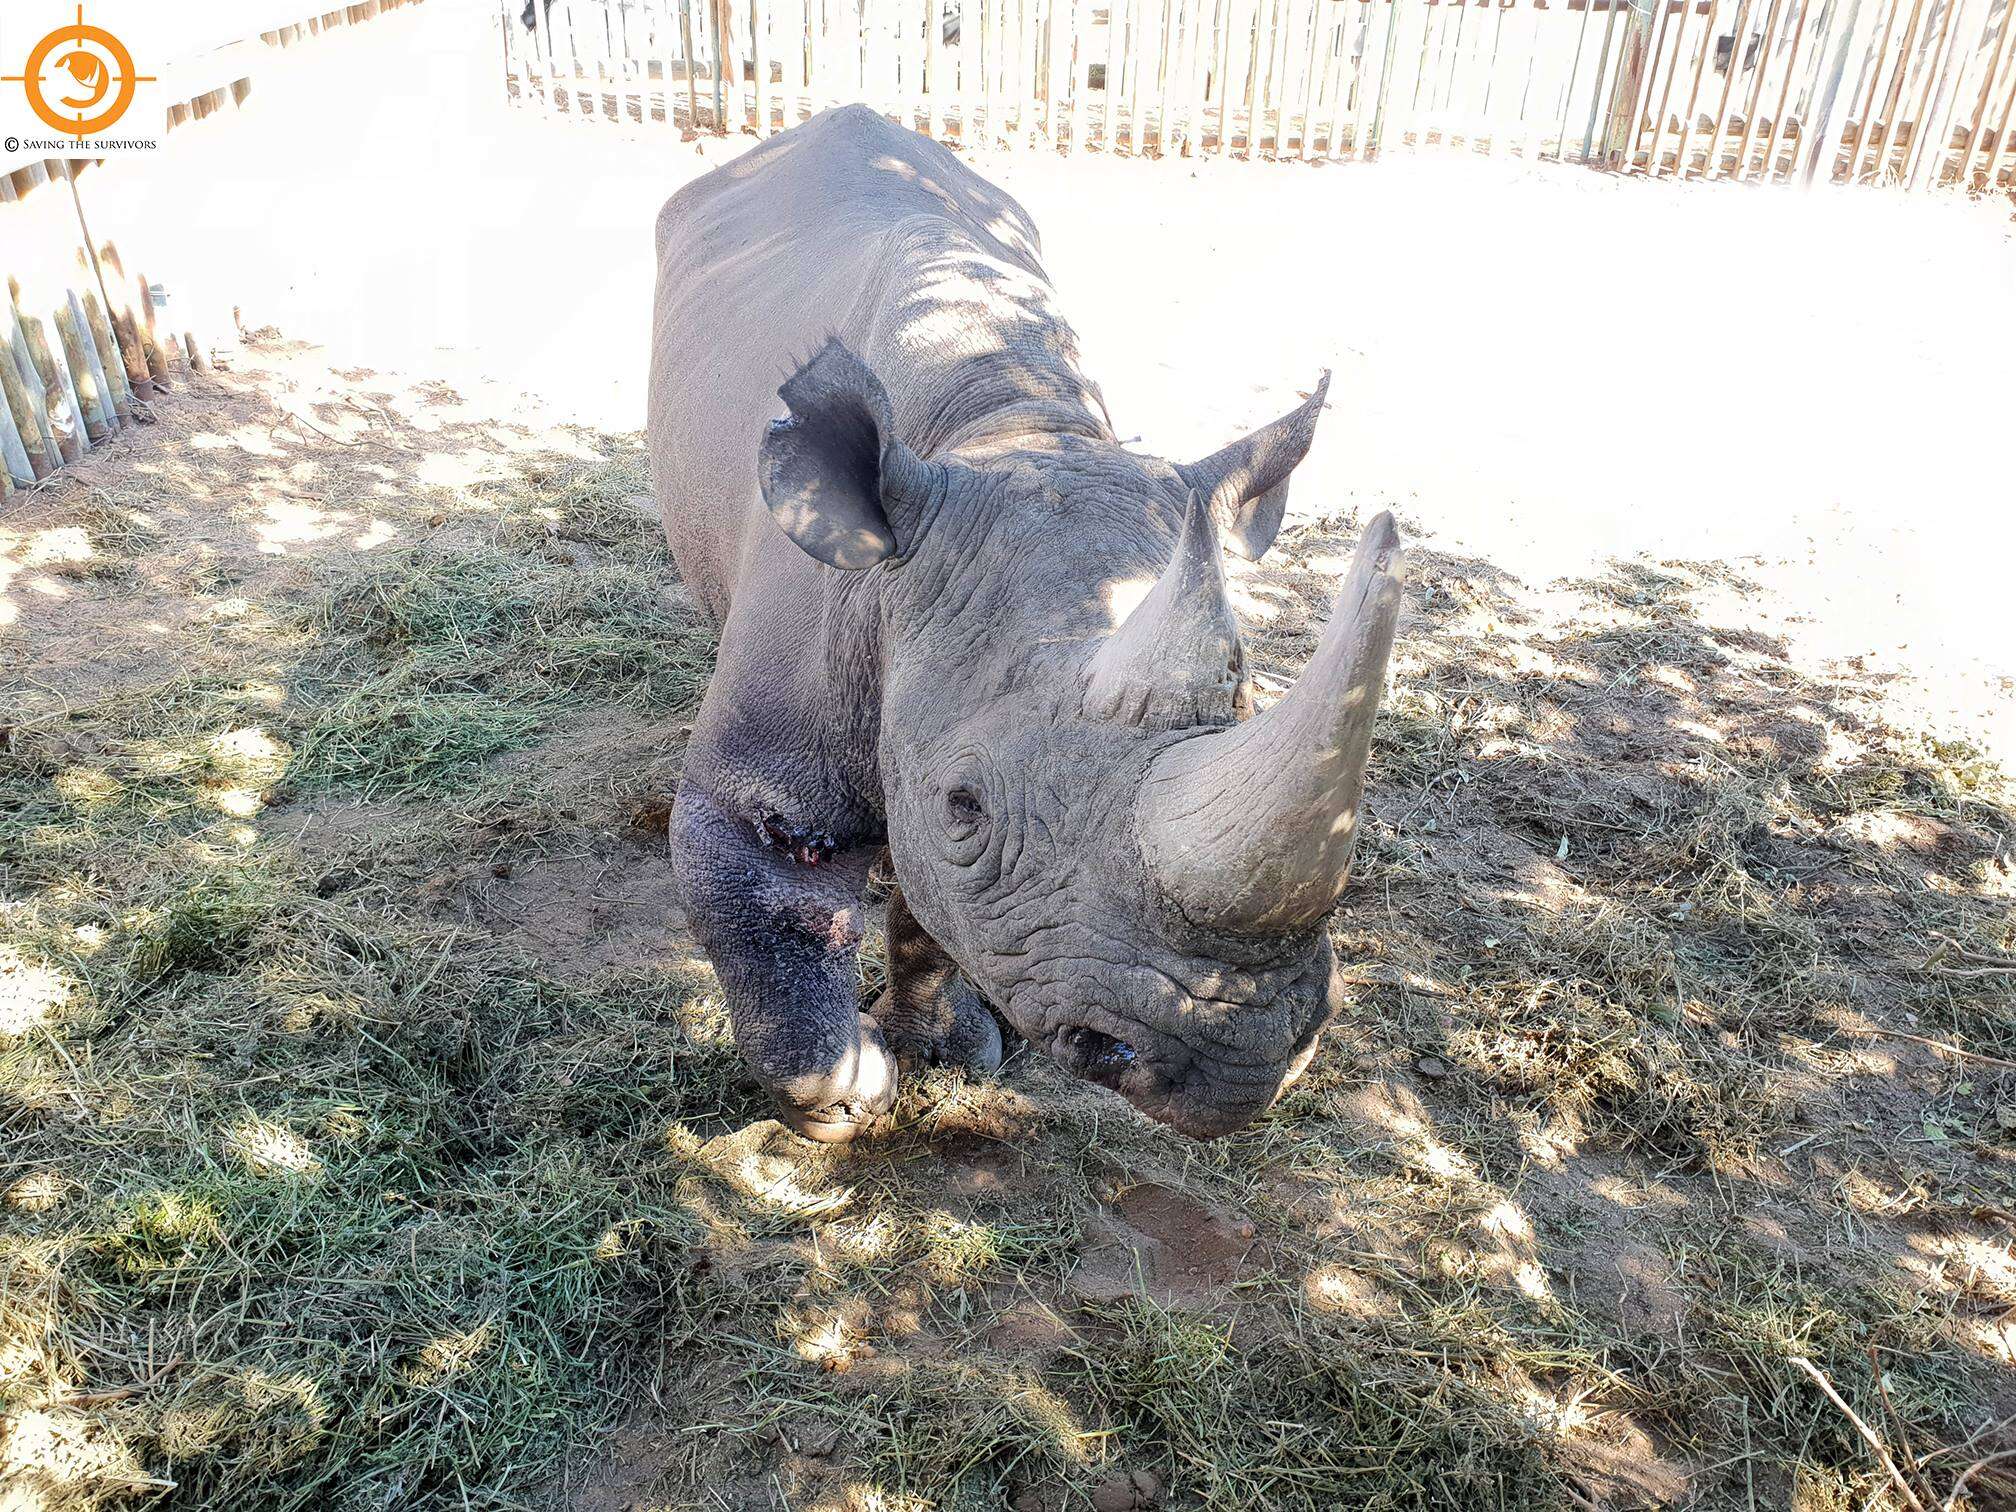 Wild black rhino shot by poachers in South Africa